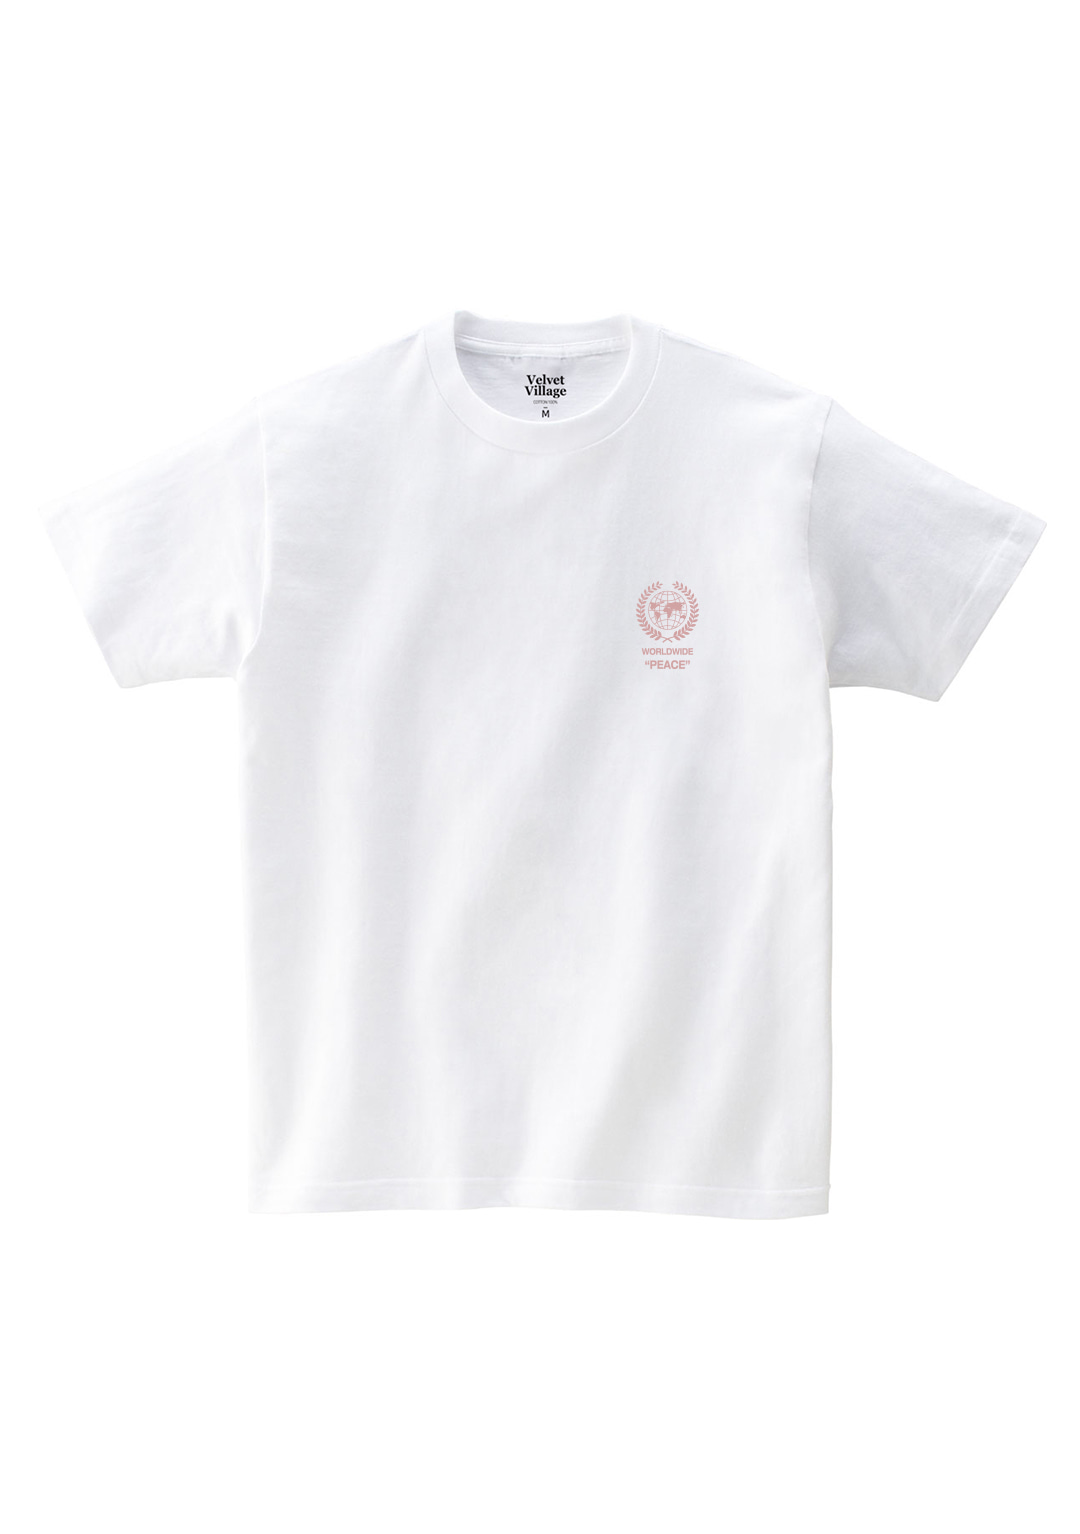 Worldwidepeace T-shirt (White)